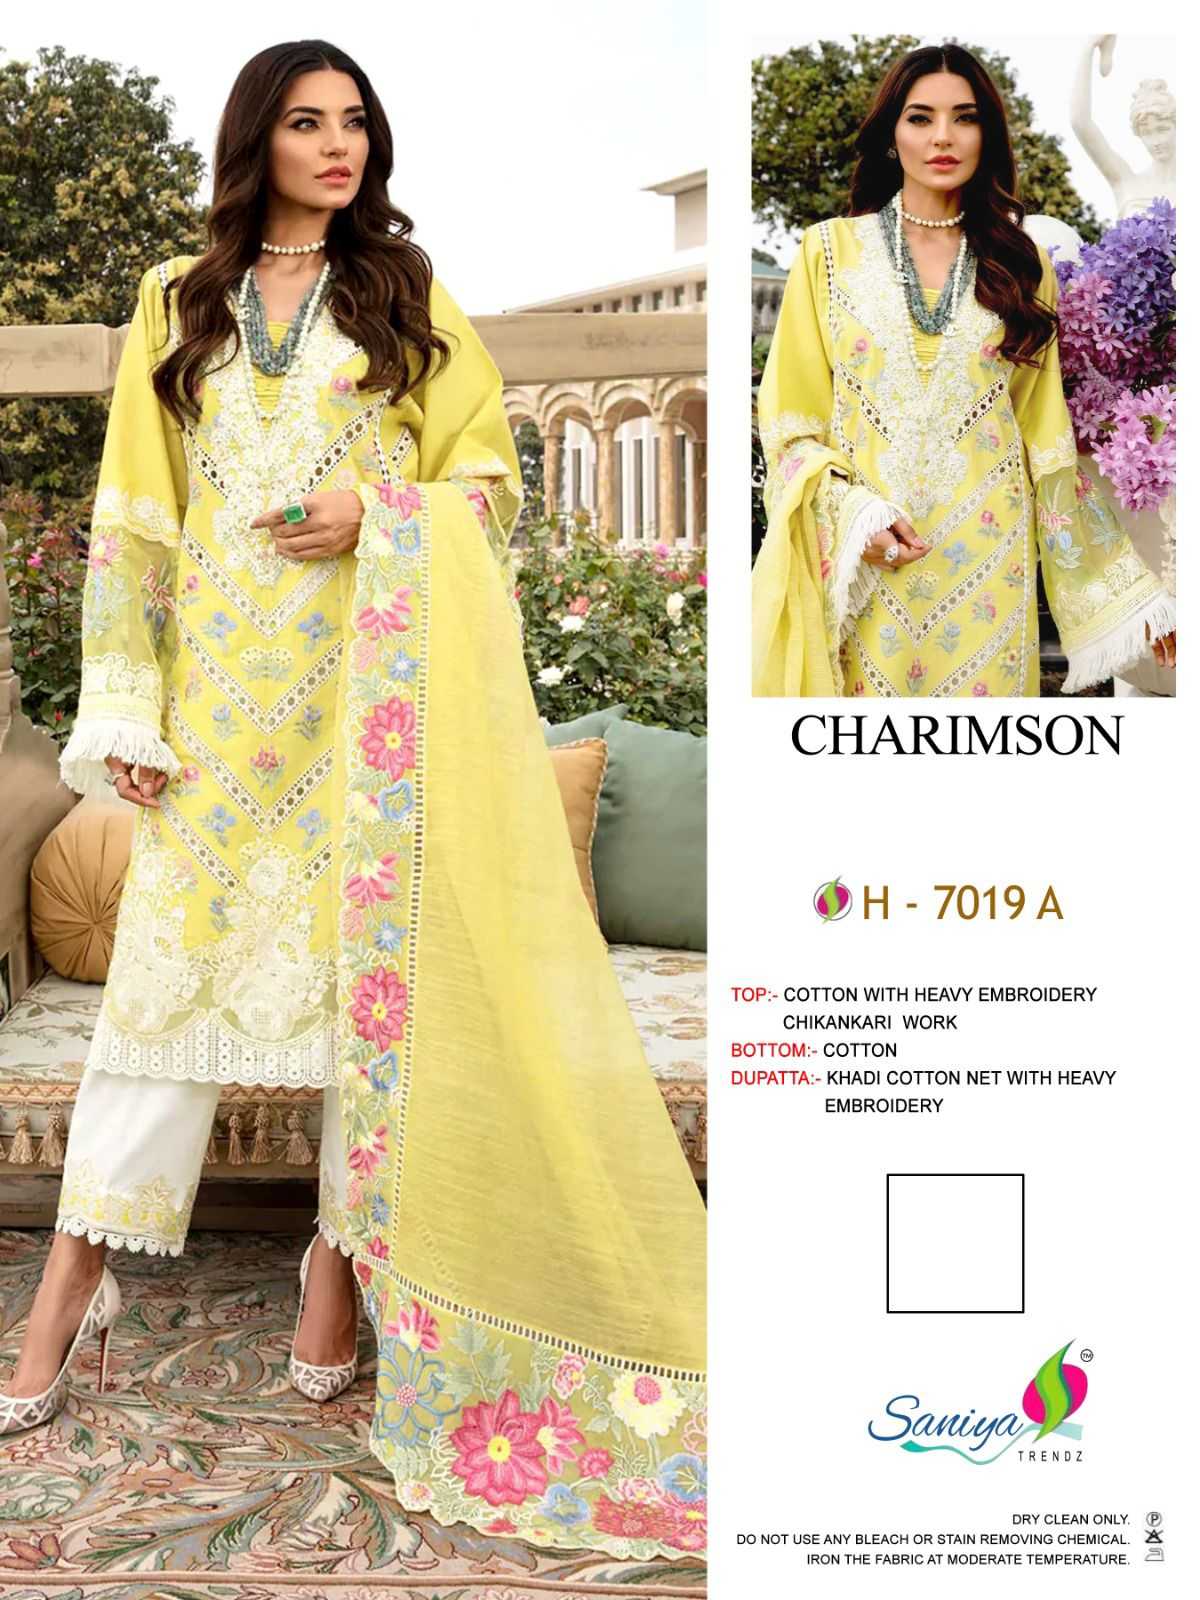 saniya trendz charimson vol 1 7019 chikankari cotton pakistani ladies suits